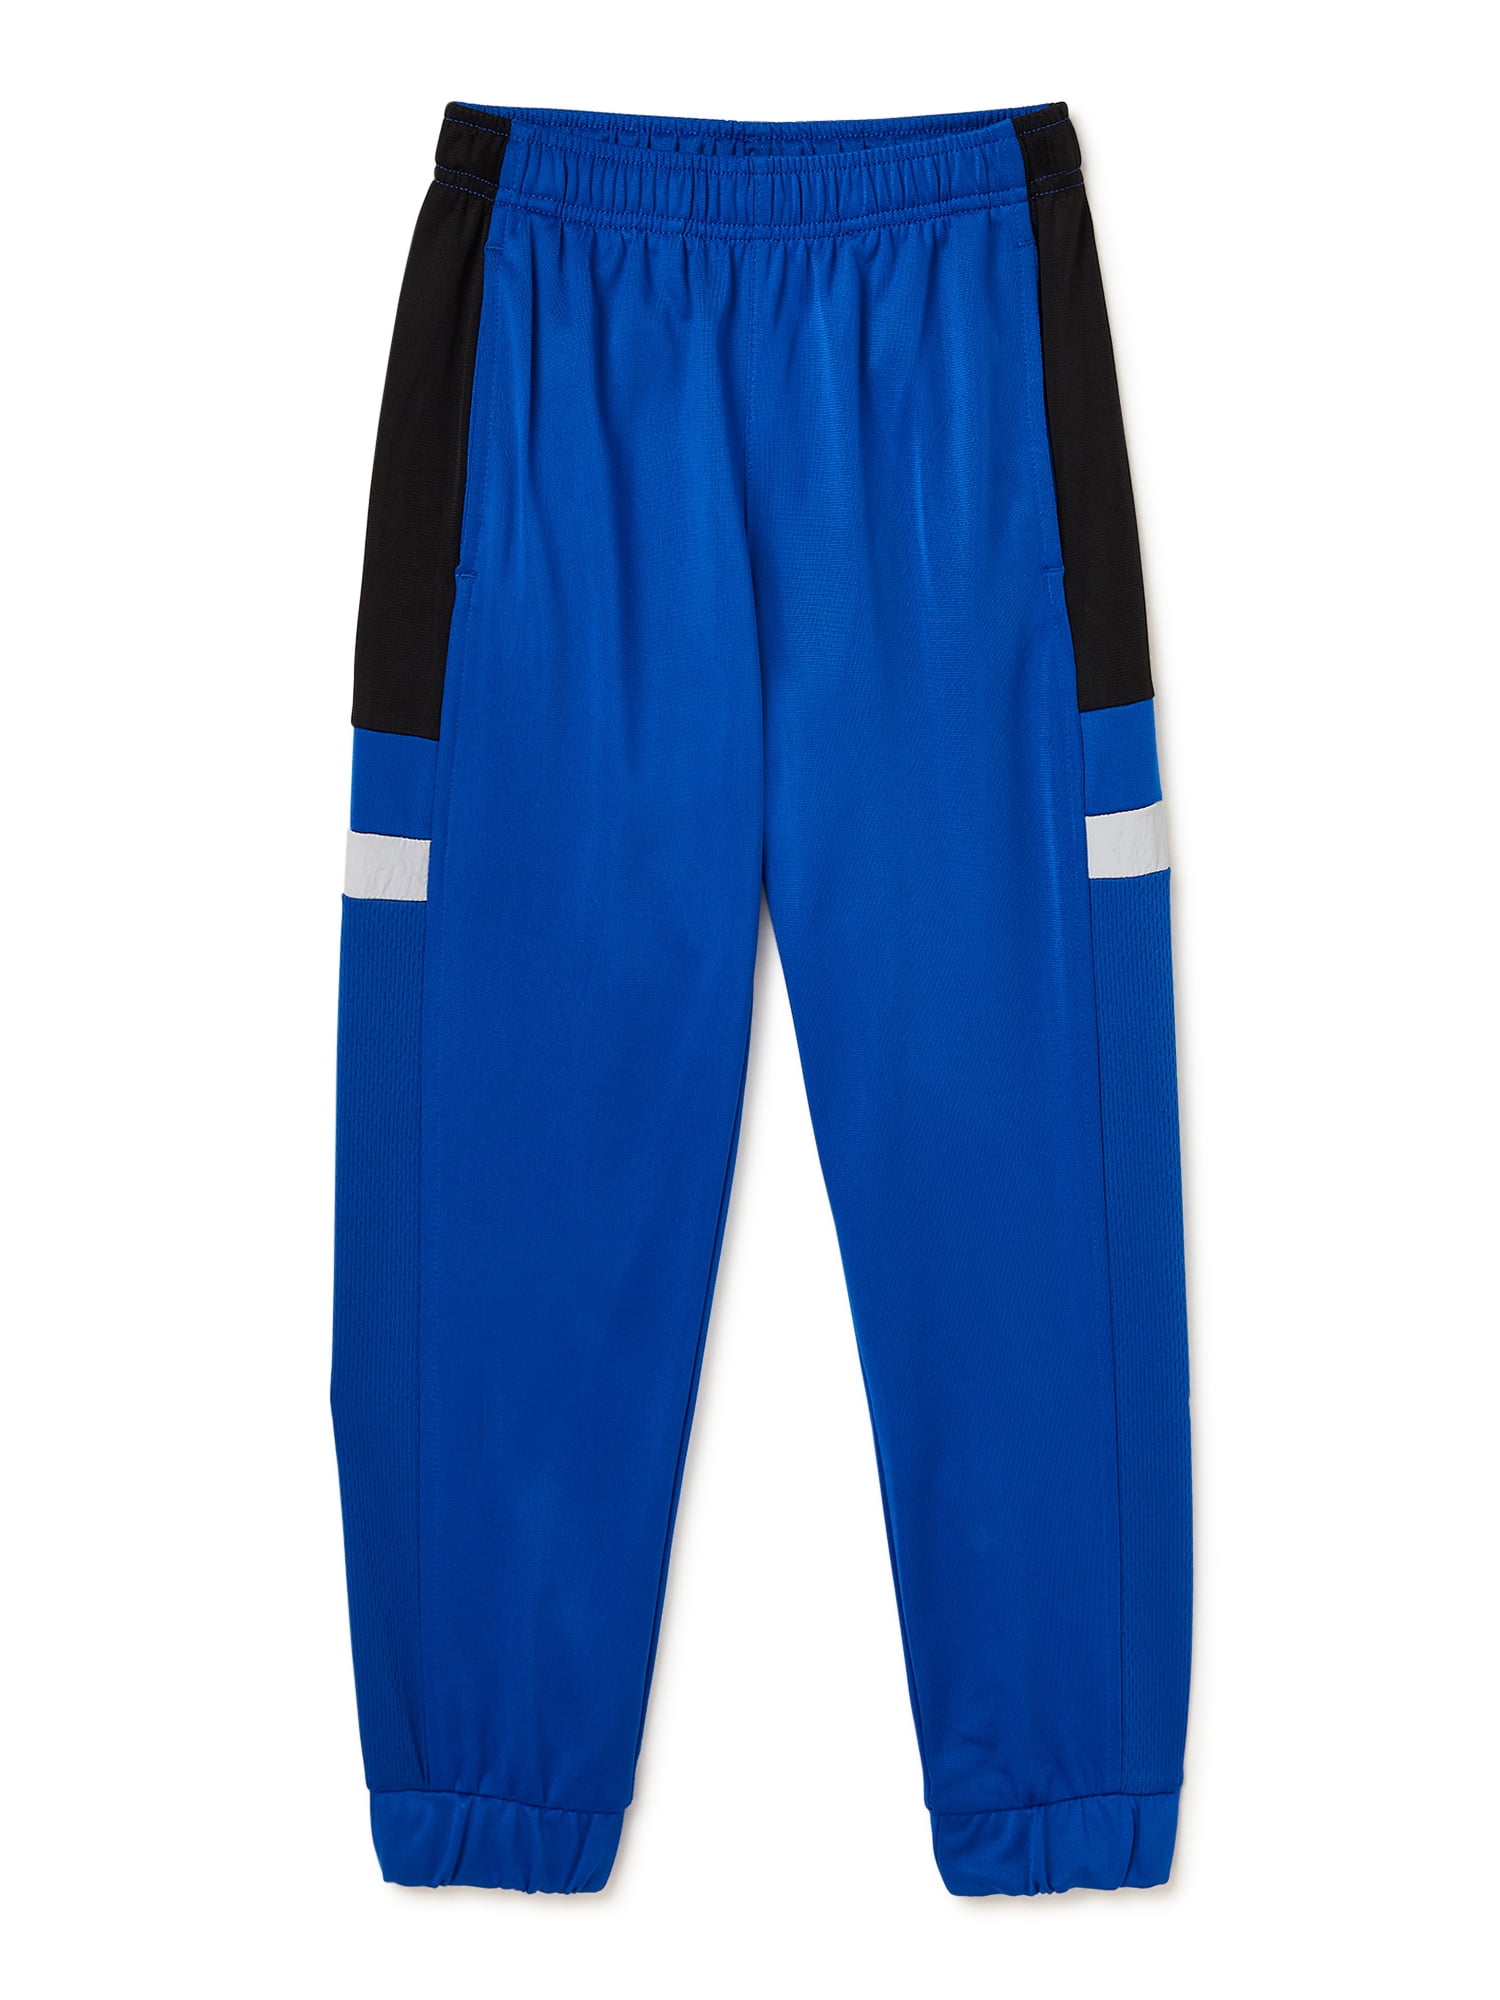 Athletic Works Boys Tricot Pants, Sizes 4-18 & Husky - Walmart.com